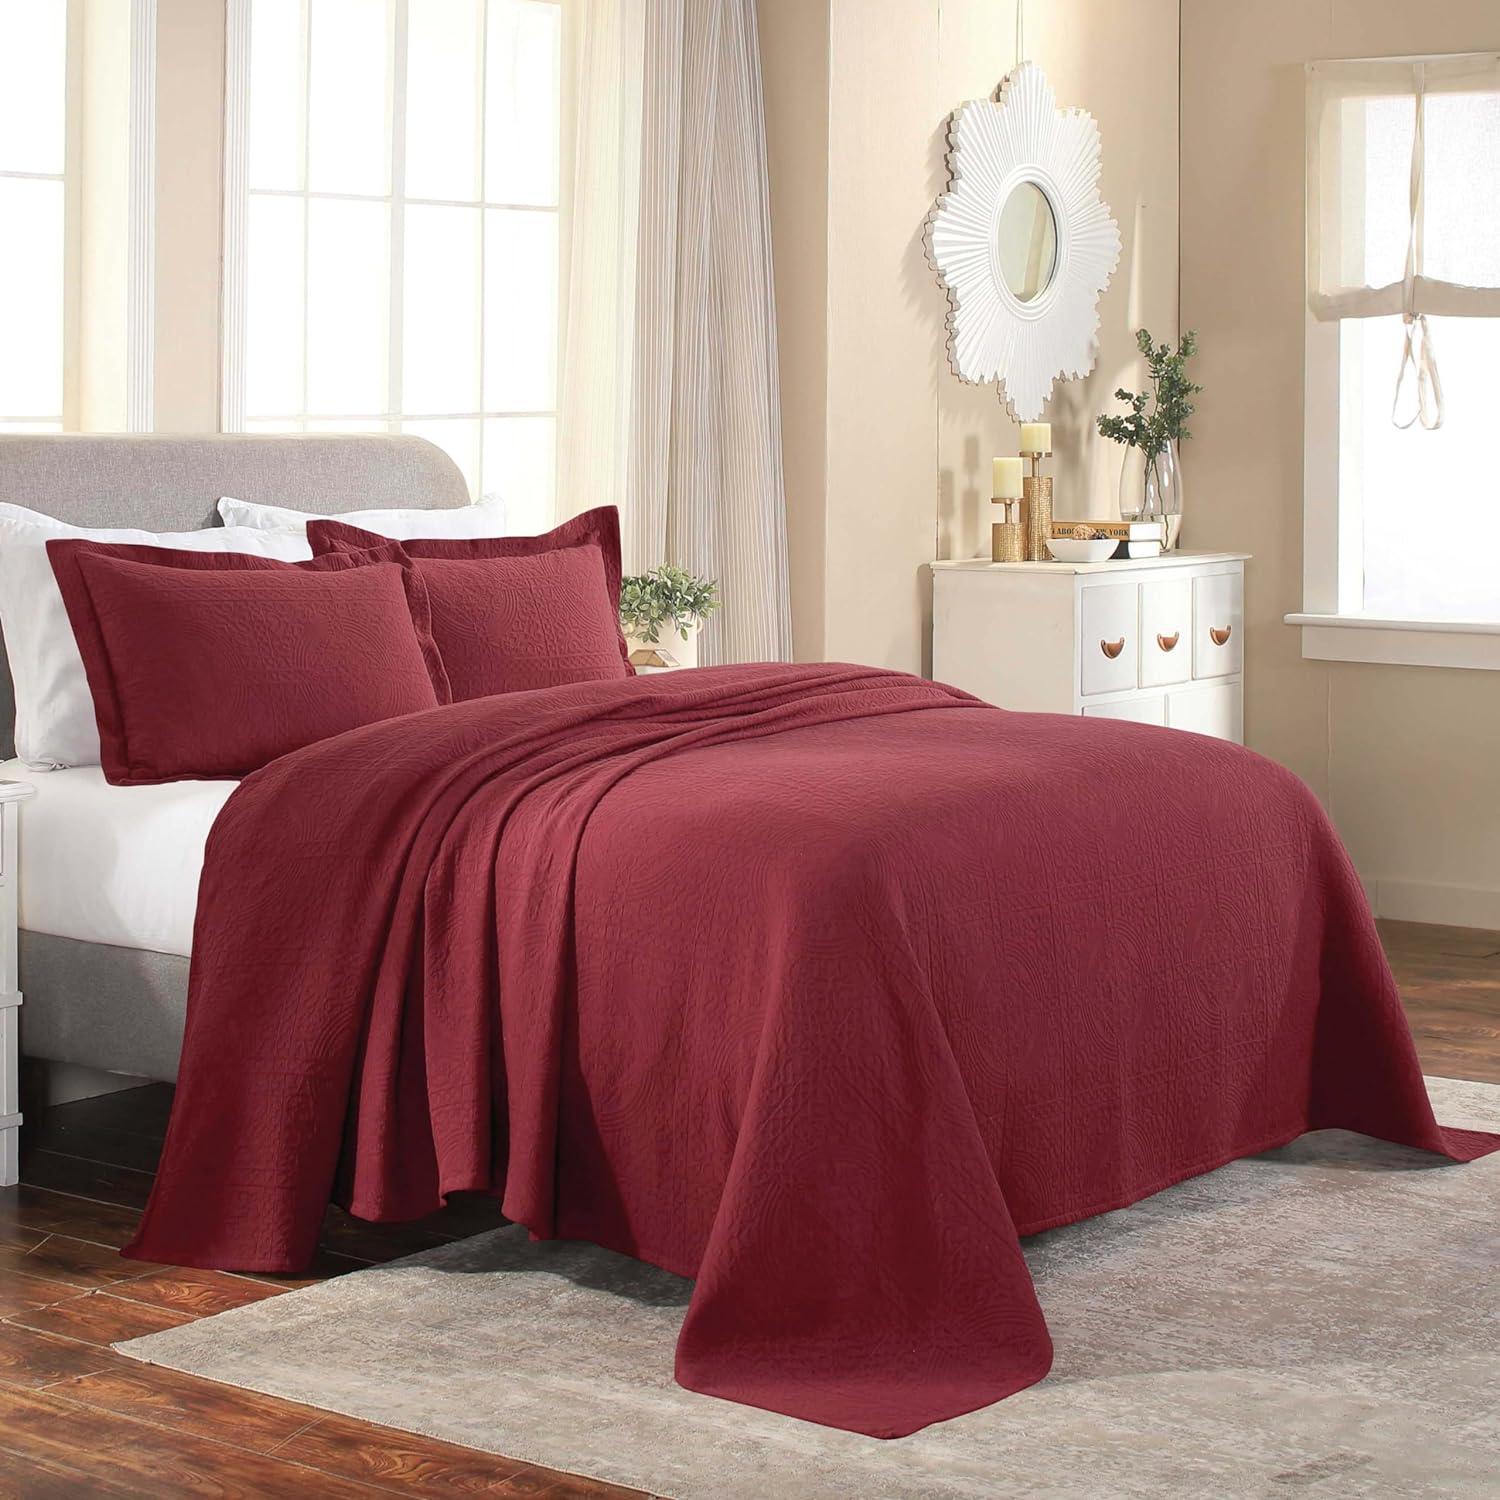 Garnet Floral Cotton Twin Bedspread Set with Pillowsham